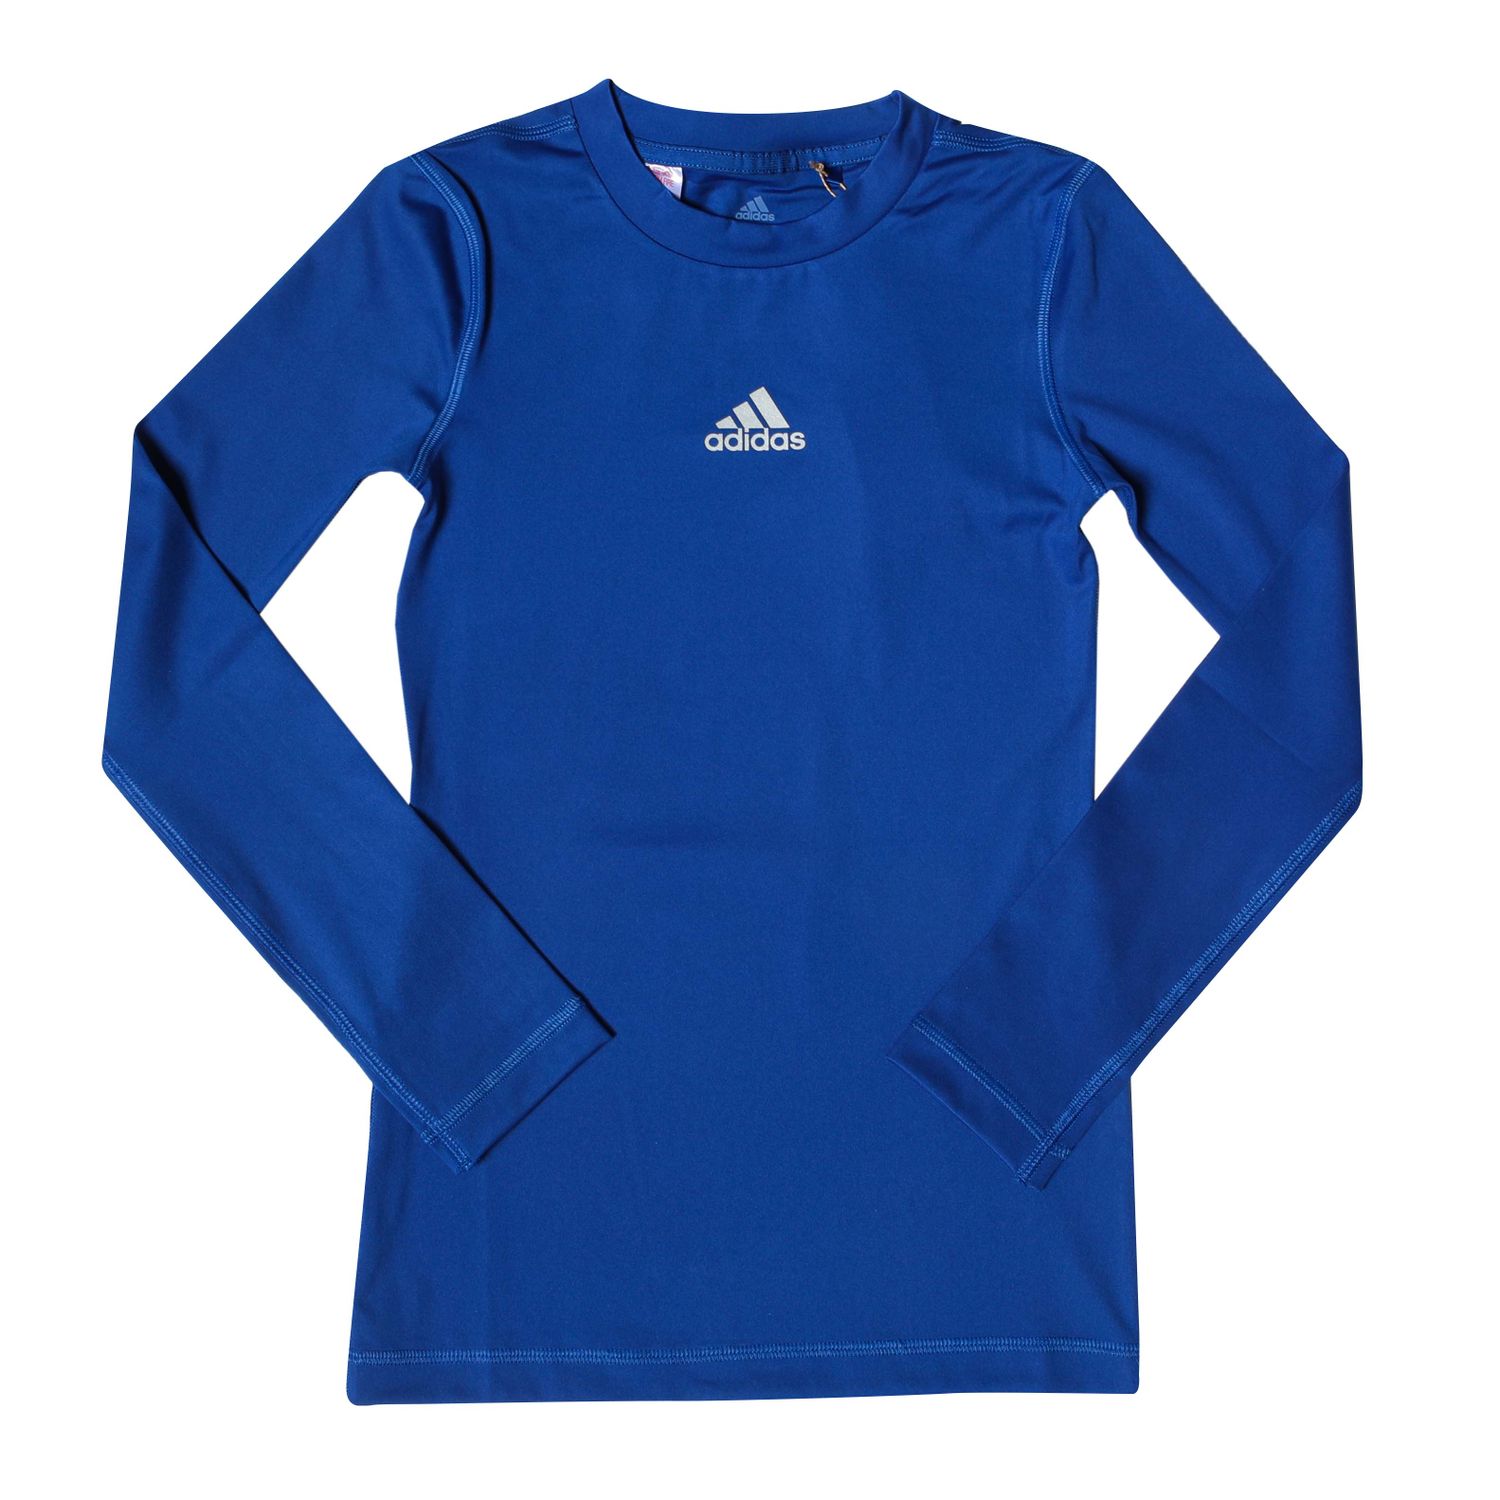 adidas Techfit Compression Shirt Mens - Blue Baselayer Top - All Sizes 